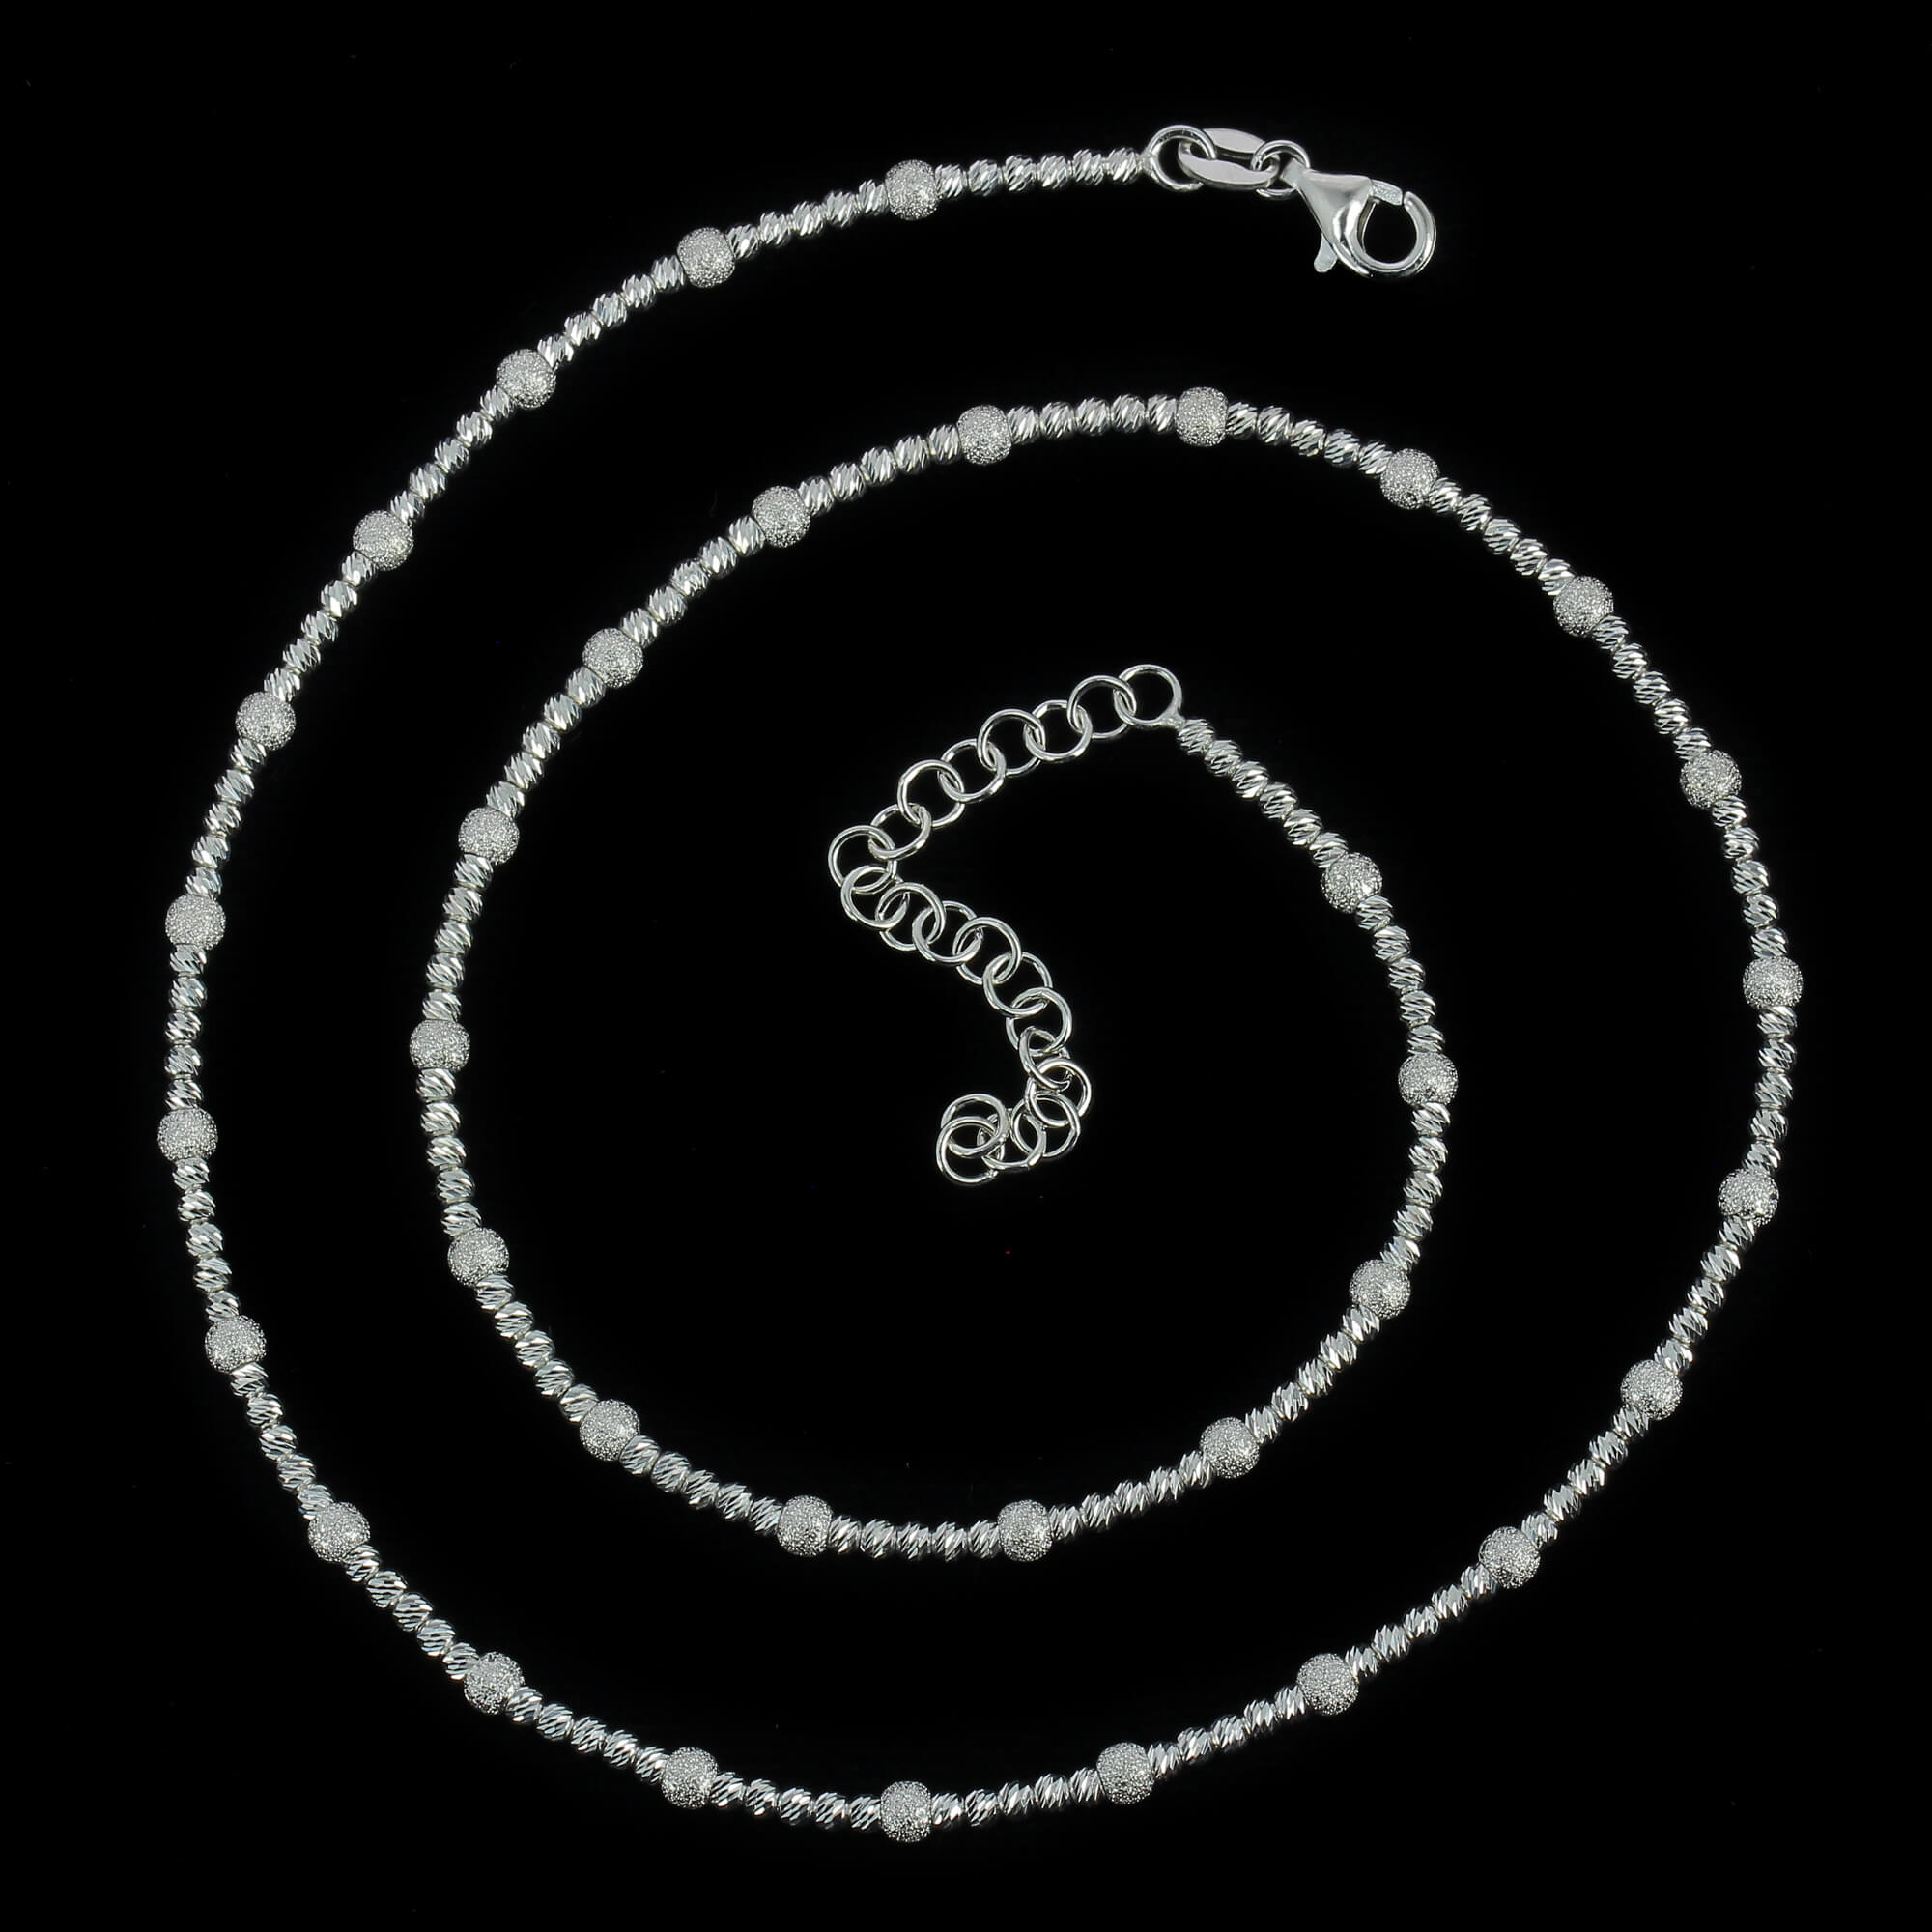 Silver ball chain; matt and shiny